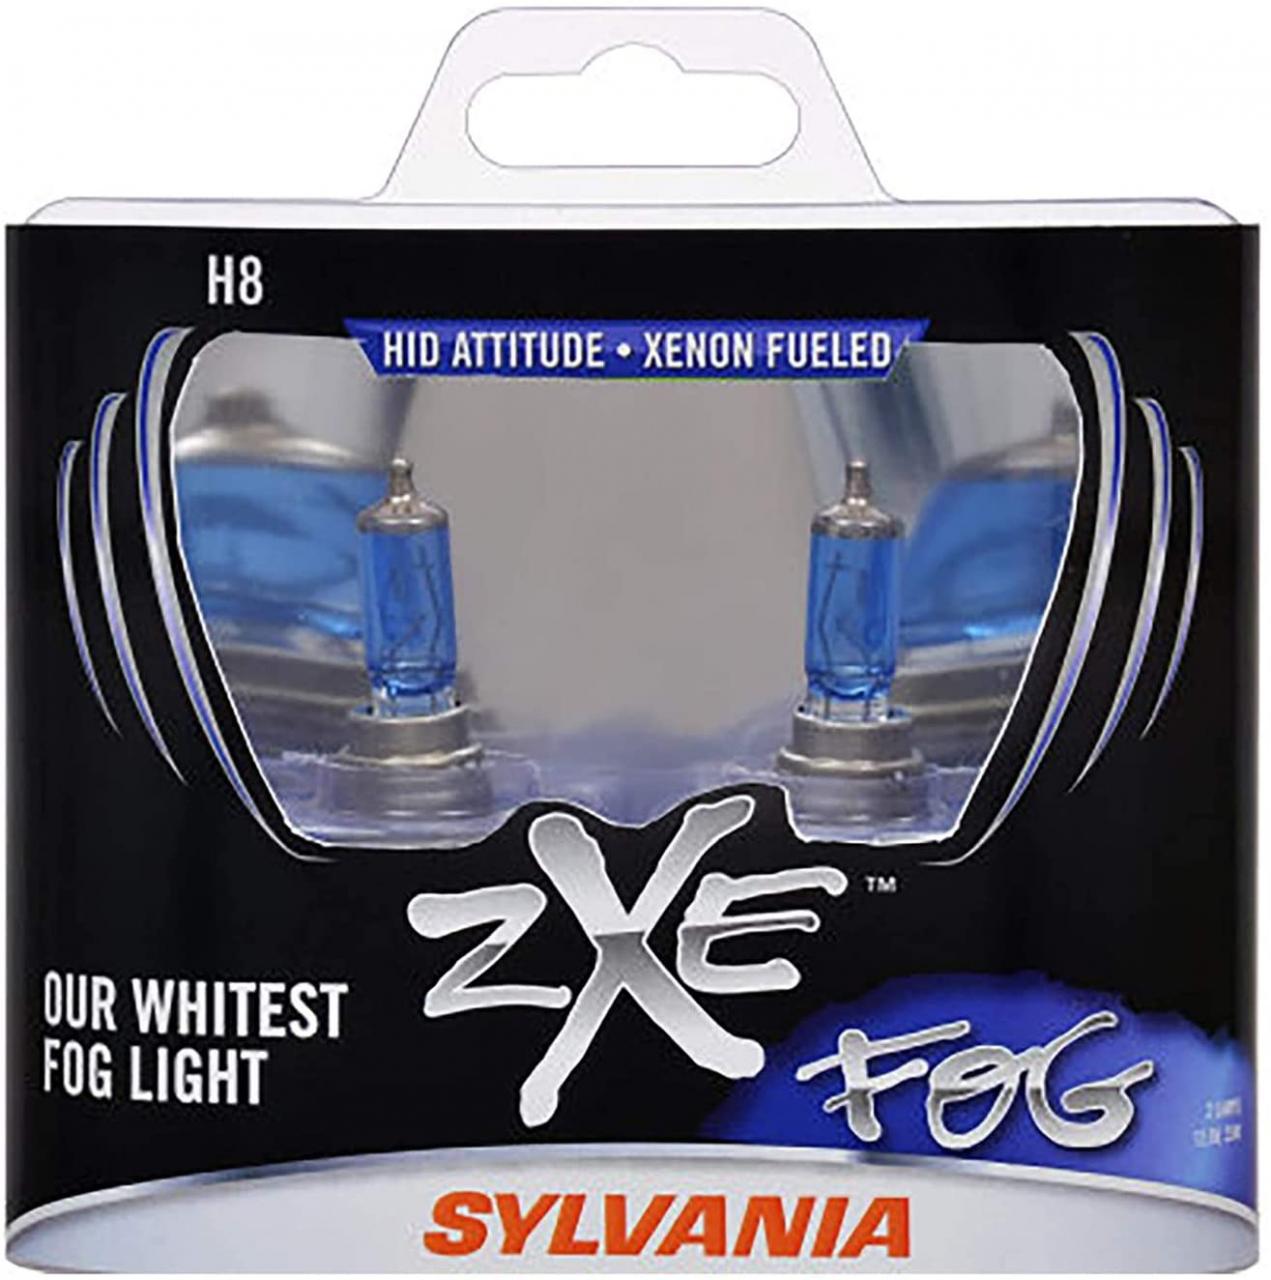 Buy SYLVANIA - 2504 (PSX24W) SilverStar zXe Fog High Performance Halogen  Fog Light Bulb - Bright White Light Output, HID Attitude, Xenon Fueled  Technology (Contains 2 Bulbs) Online in Vietnam. B079Z9QDXP